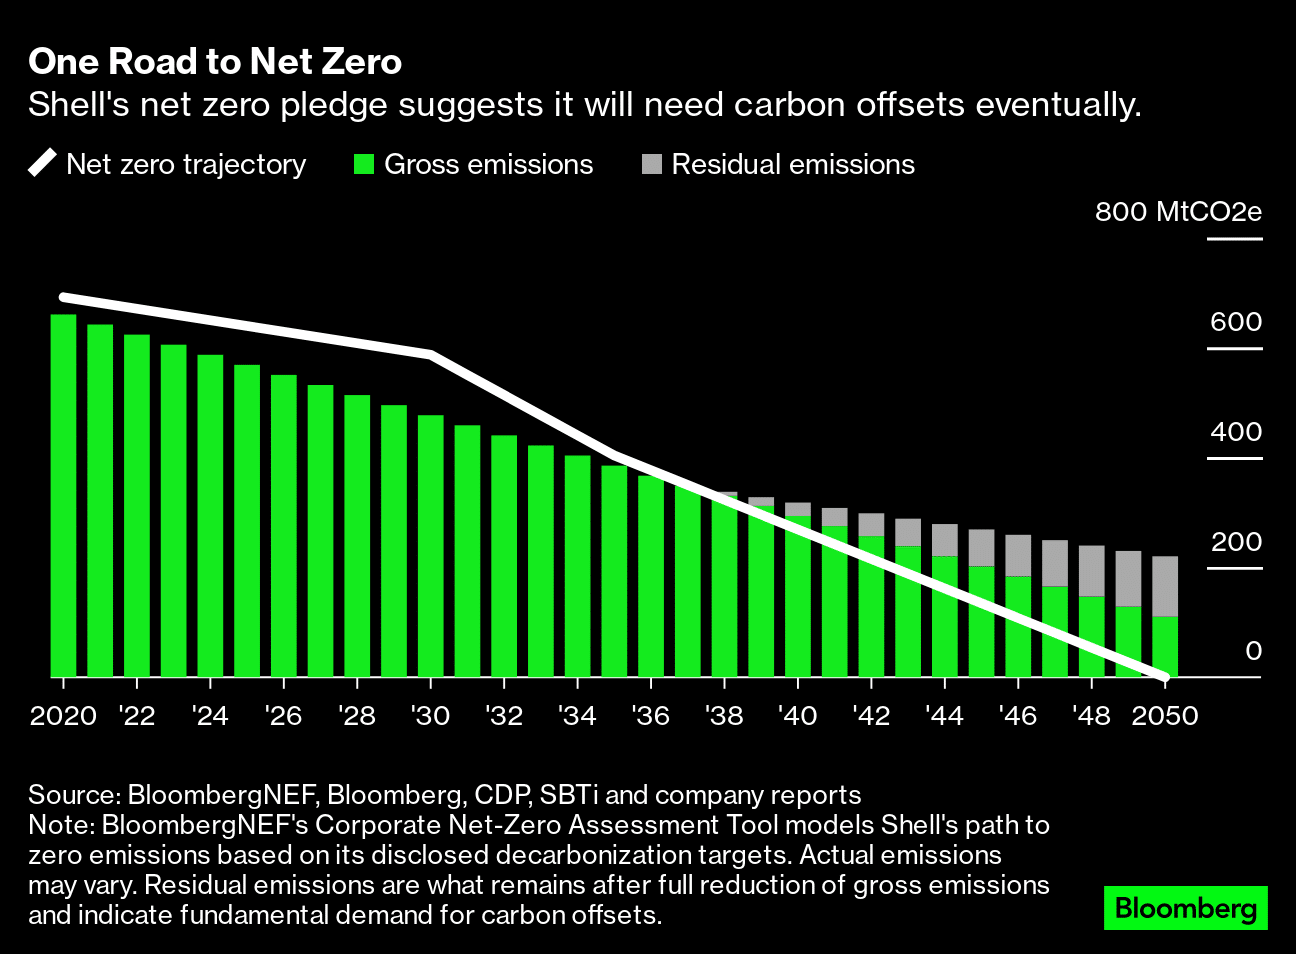 Shell net zero pledge needs carbon offsets